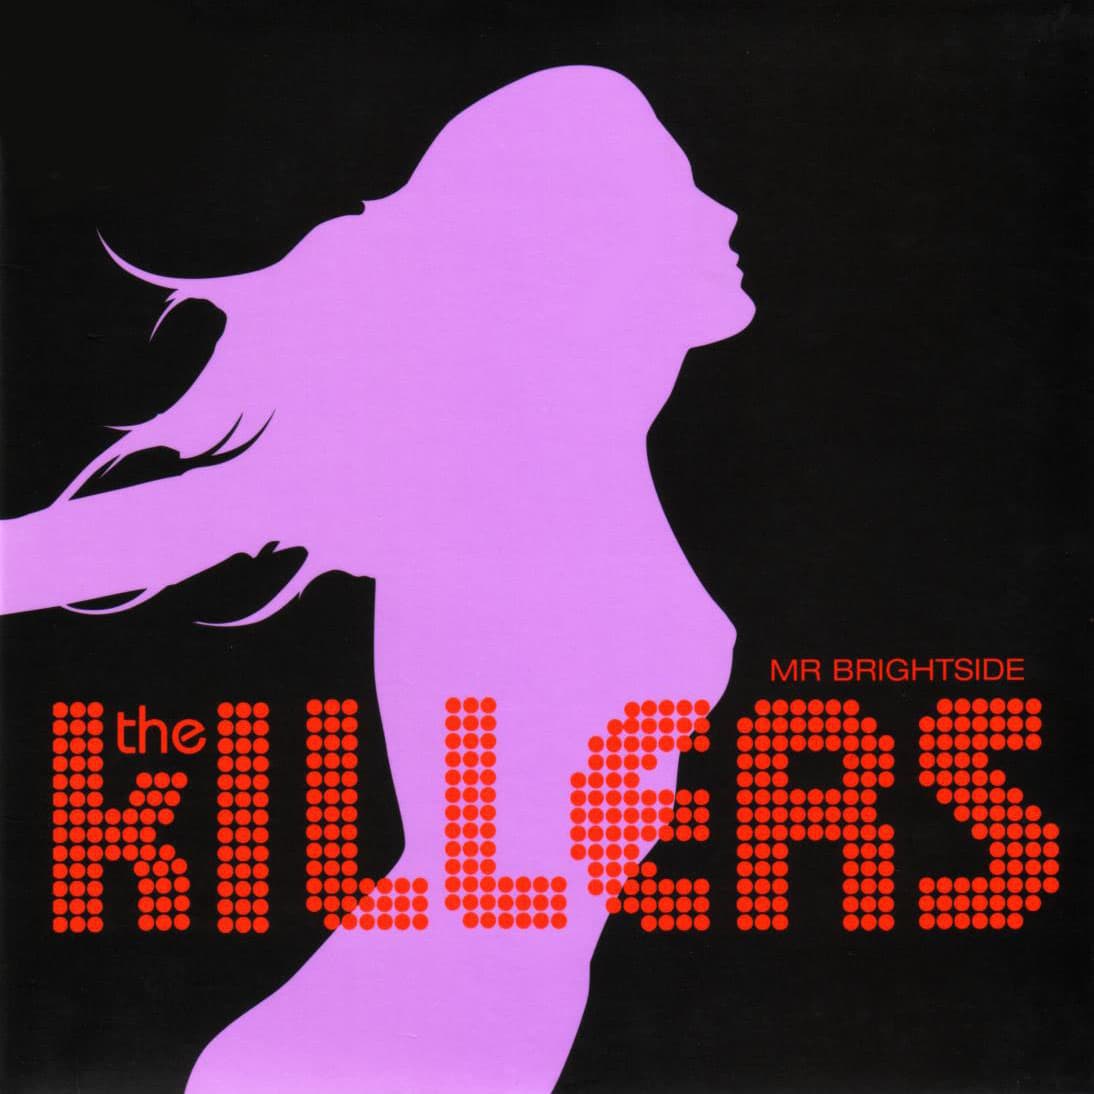 Killers brightside перевод. The Killers - Mr. Brightside Жанр. The Killers альбомы. The Killers обложки альбомов. Somebody told me трек – the Killers.